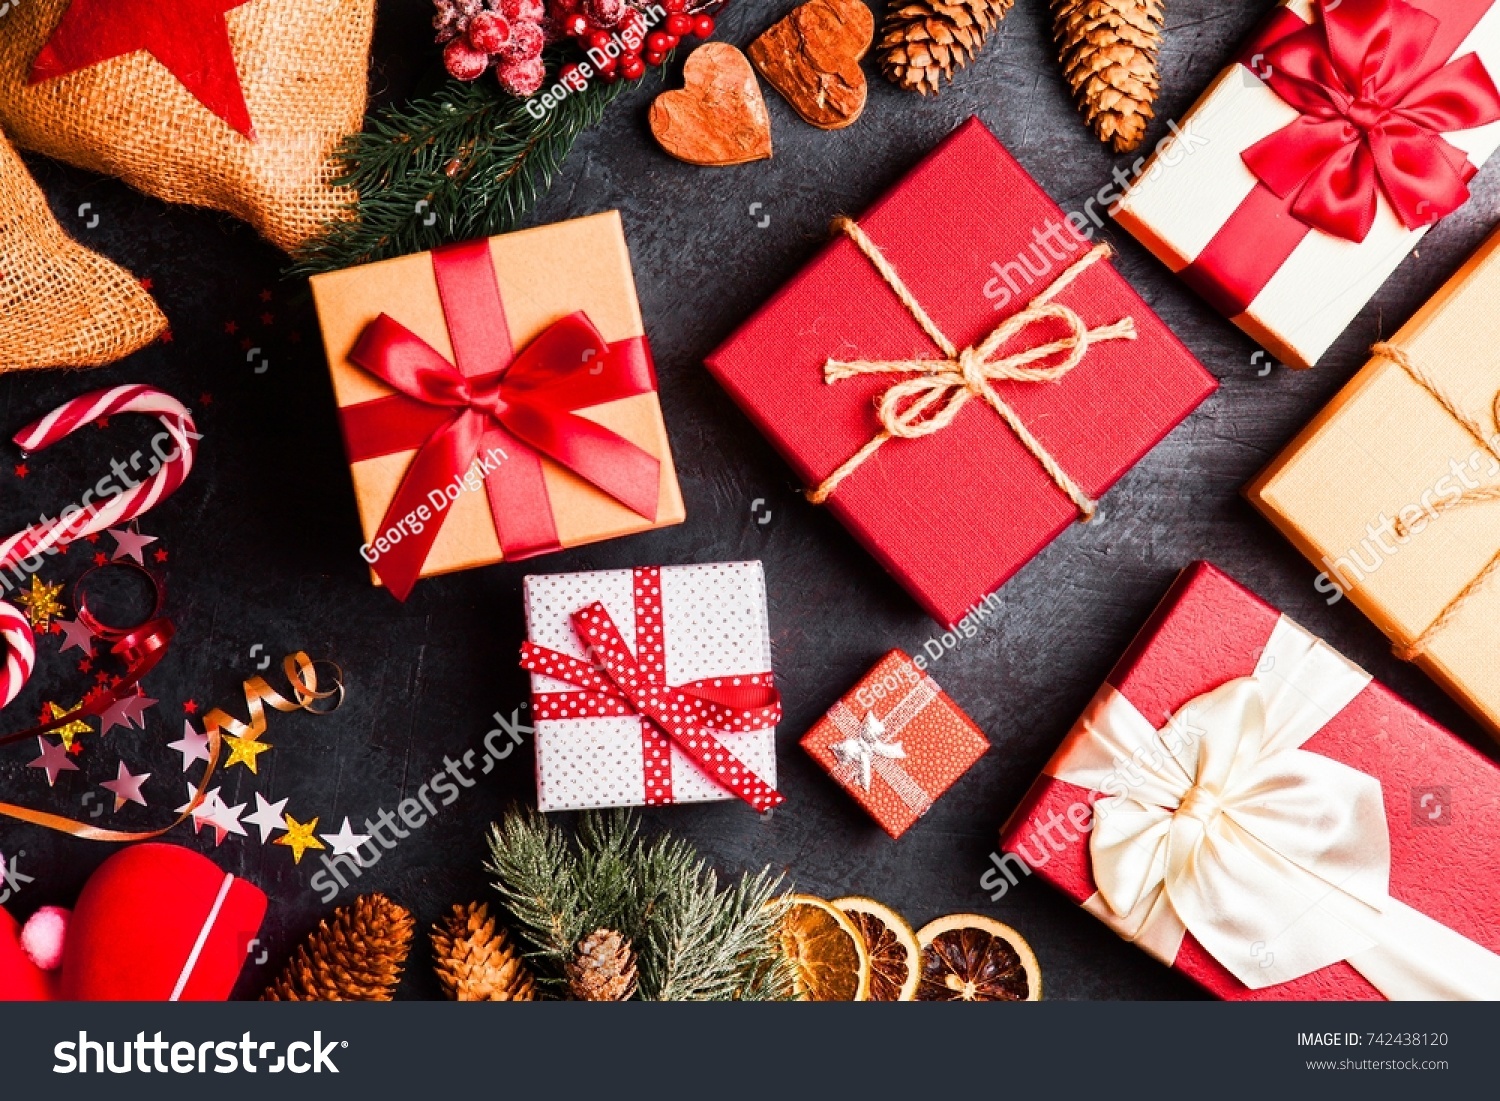 Christmas presents on dark background #742438120